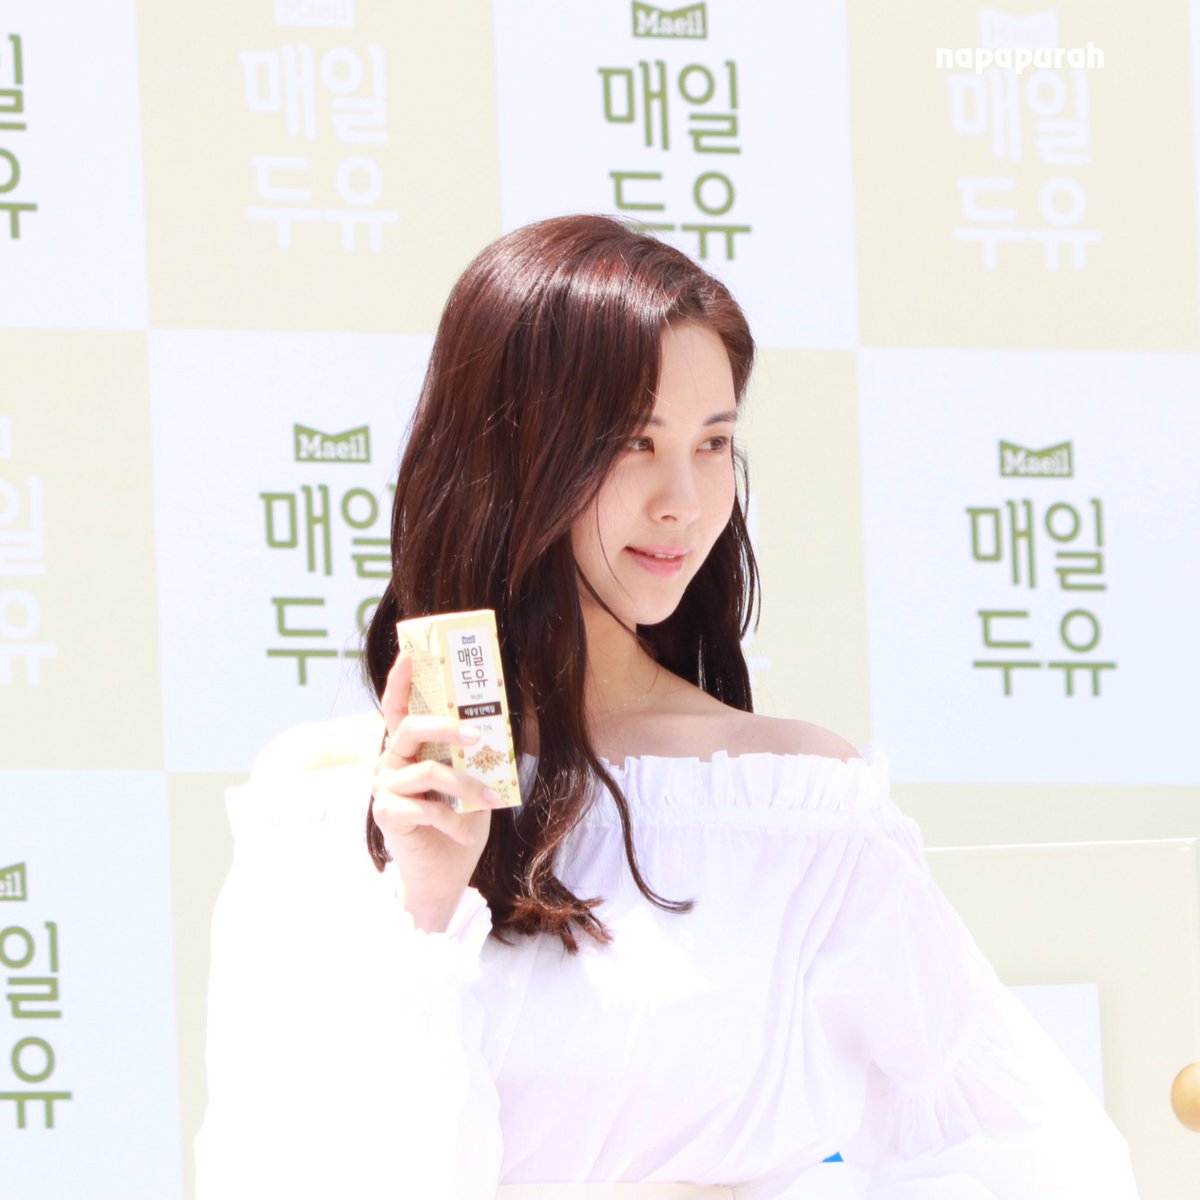  [PIC][03-06-2017]SeoHyun tham dự sự kiện “City Forestival - Maeil Duyou 'Confidence Diary'” vào chiều nay - Page 3 DBpDNwEUwAAaJ2j